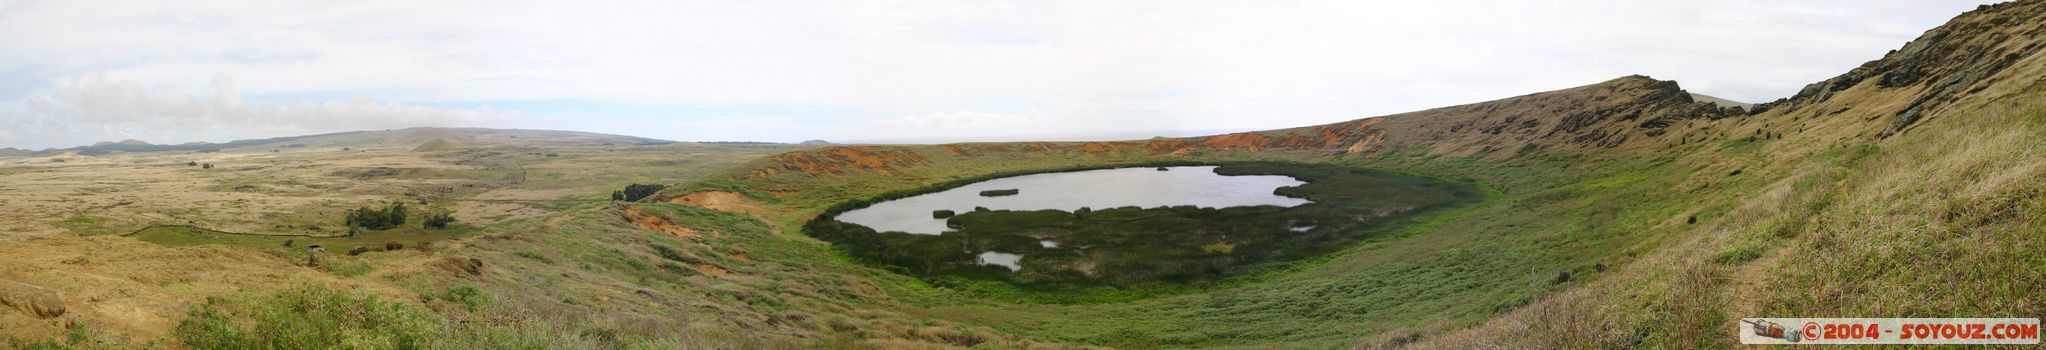 Ile de Paques - Rano Raraku - panorama
Mots-clés: chile Ile de Paques Easter Island patrimoine unesco volcan Lac panorama